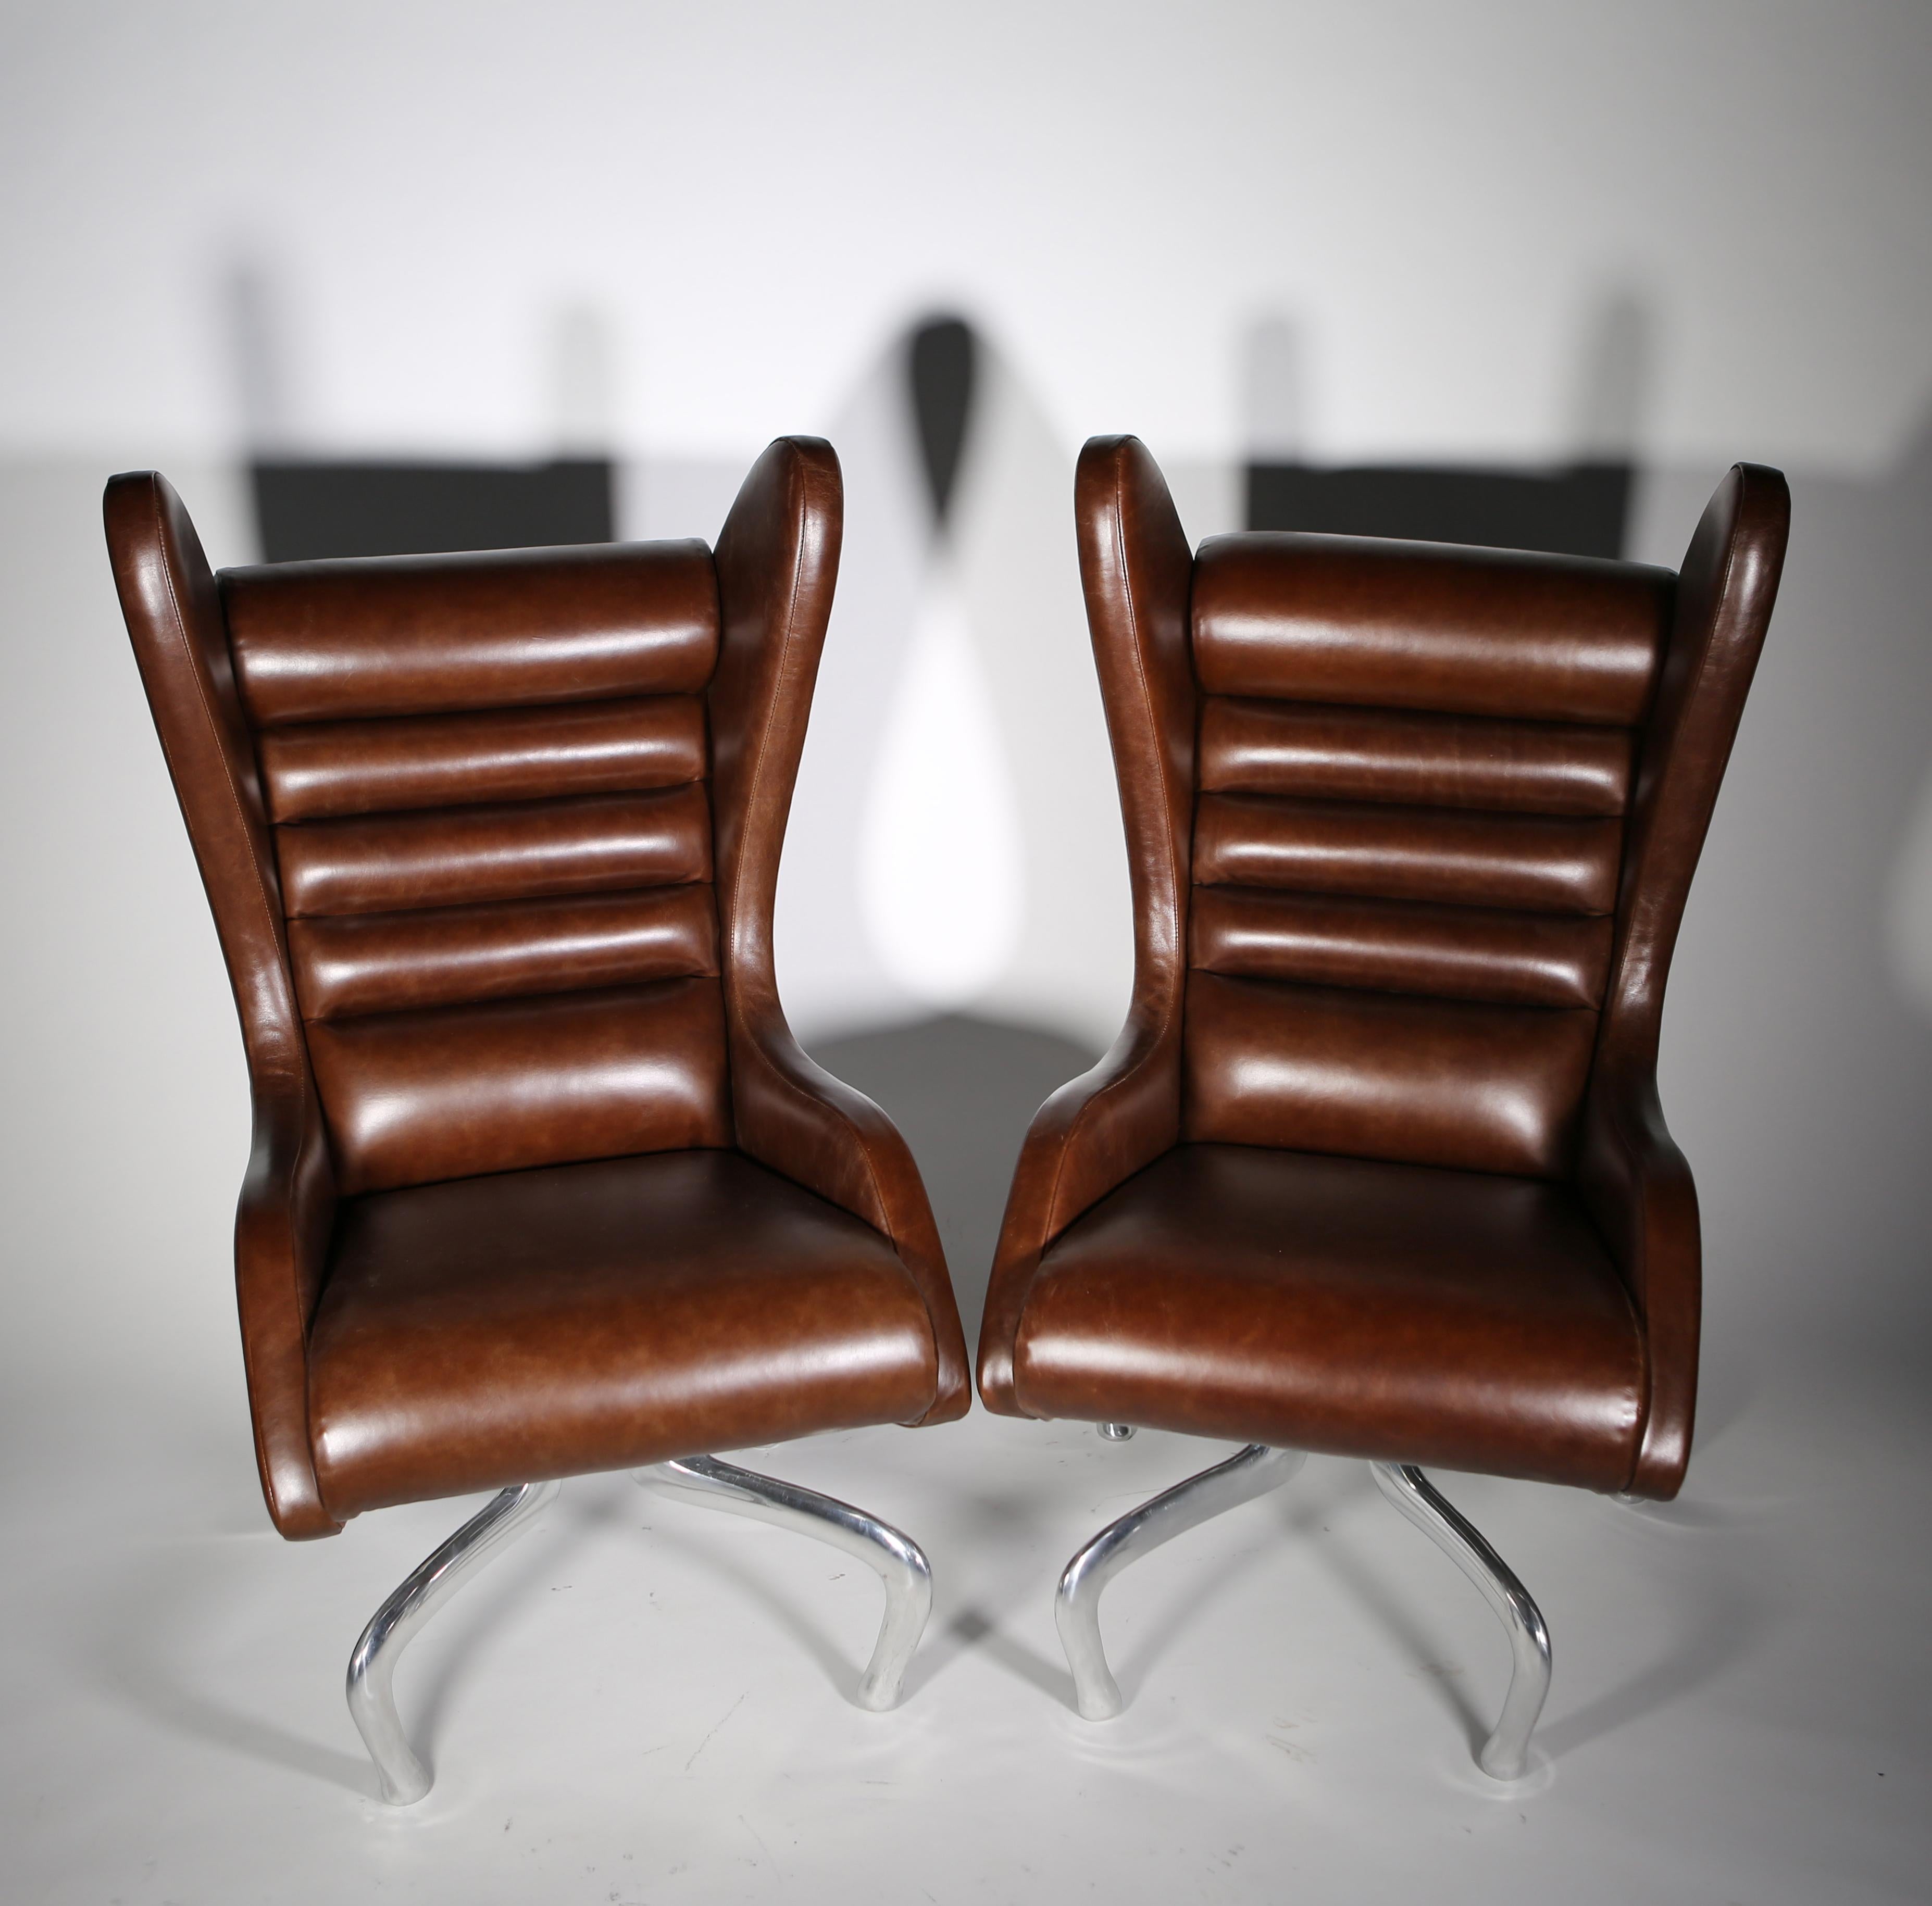 American Cantering Lounge Chair, Leather / Cast Aluminium, Jordan Mozer, USA, 2003-2018 For Sale